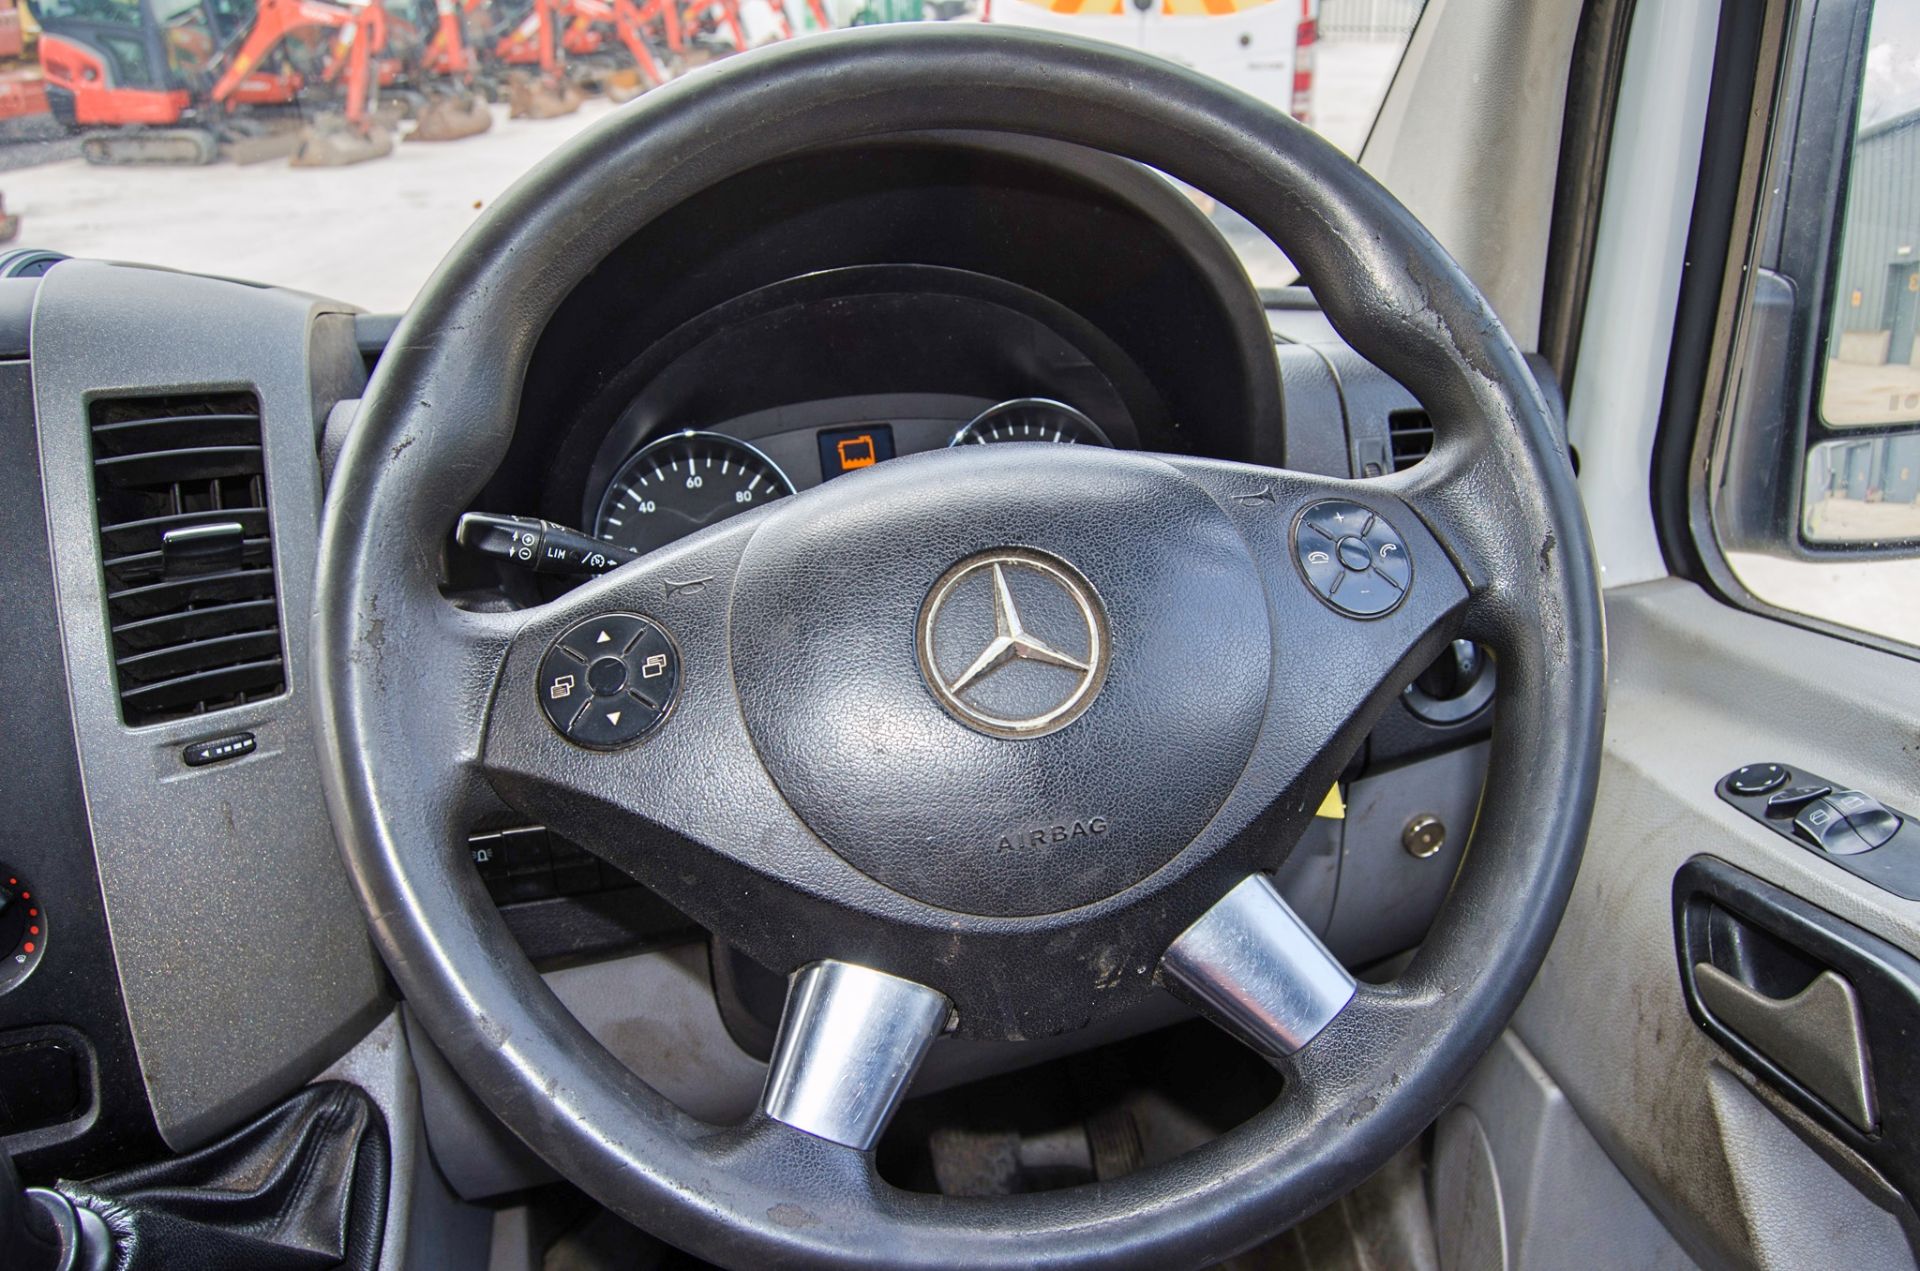 Mercedes Benz Sprinter 313CDi 2.1 diesel 6 speed manual MWB panel van Registration Number: HV63 - Image 23 of 29